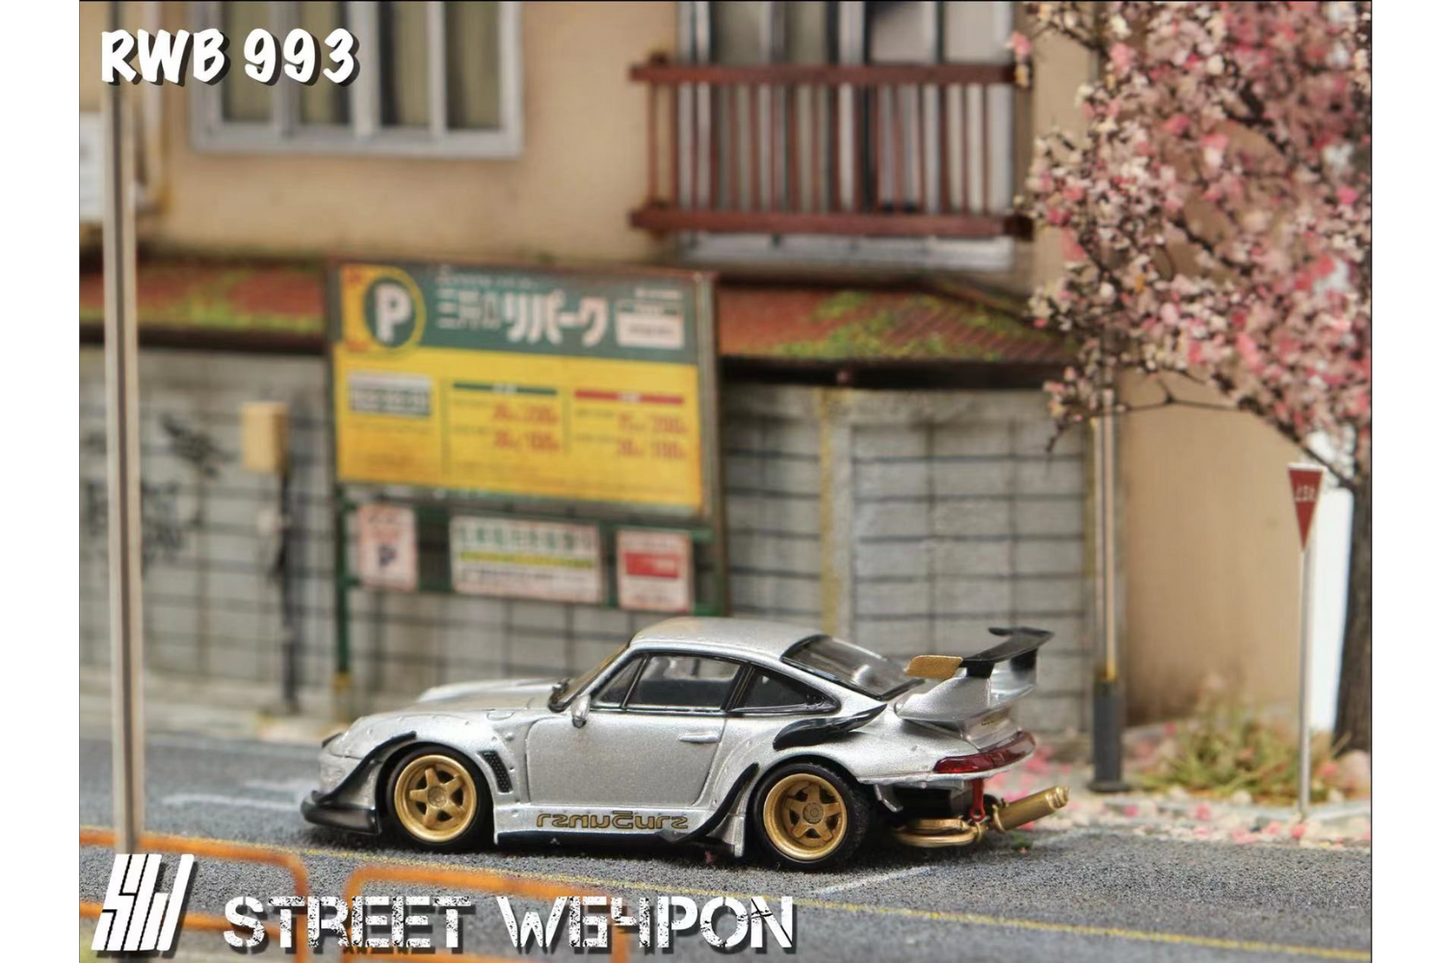 Street Weapon 1/64 Porsche Heavenly RWB 993 Ramintra in Silver